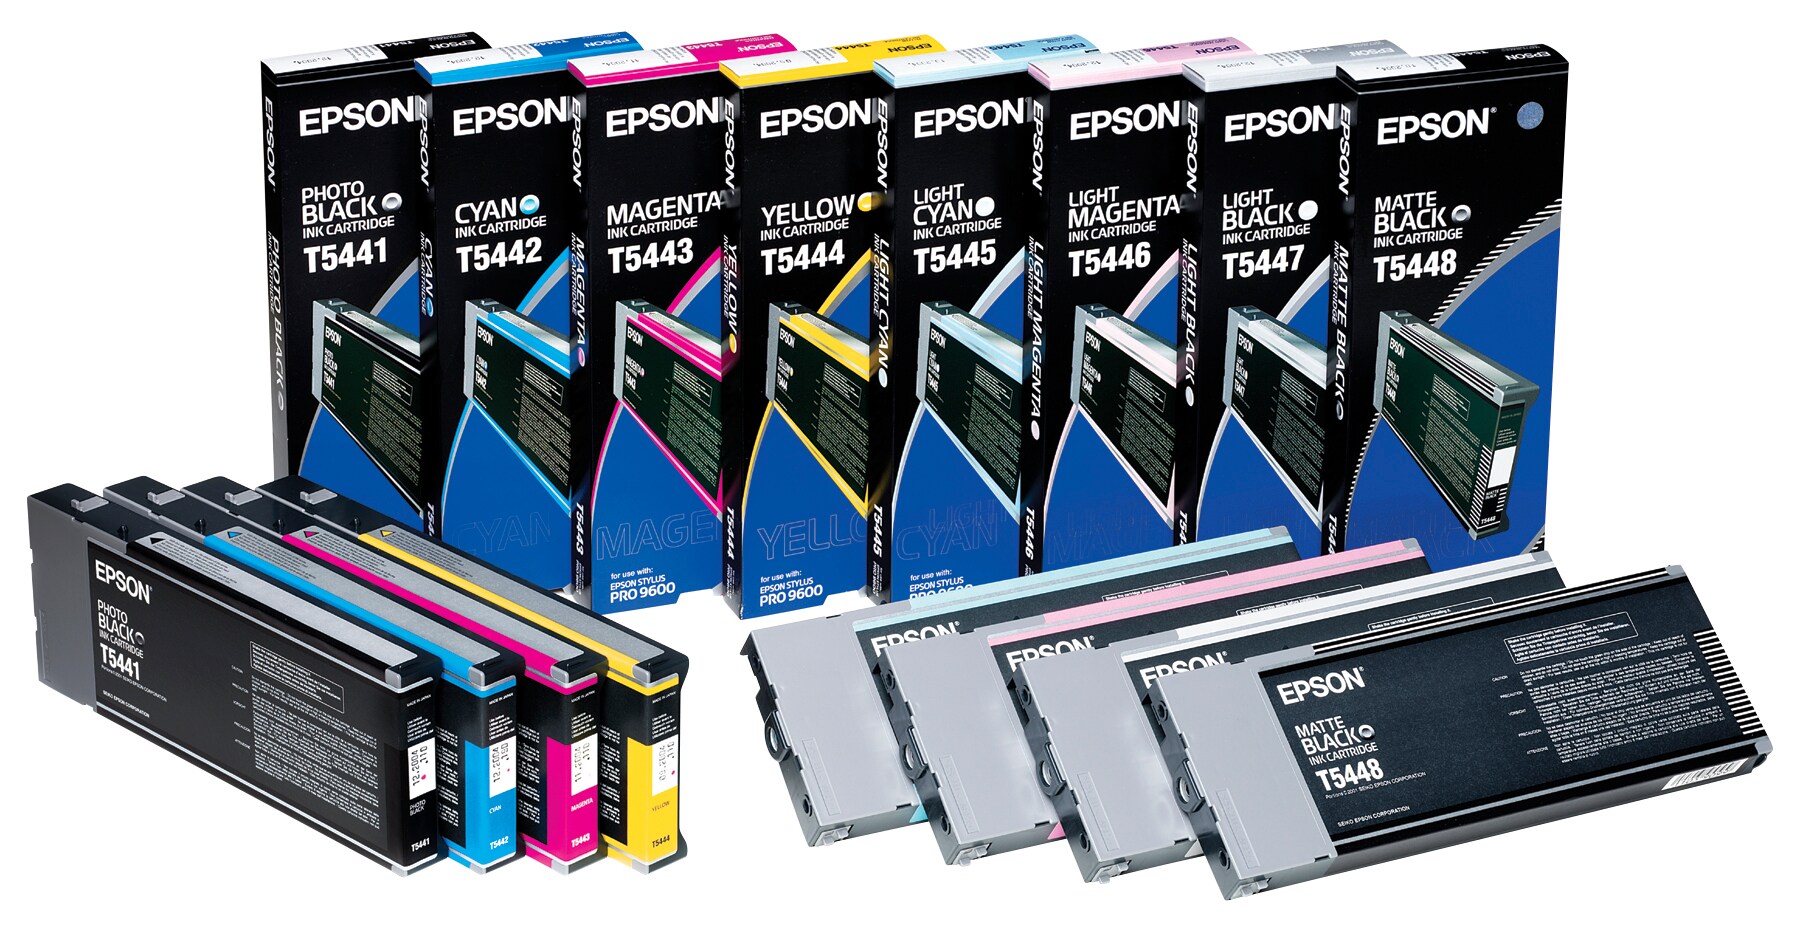 Epson UltraChrome Cyan Ink Cartridge